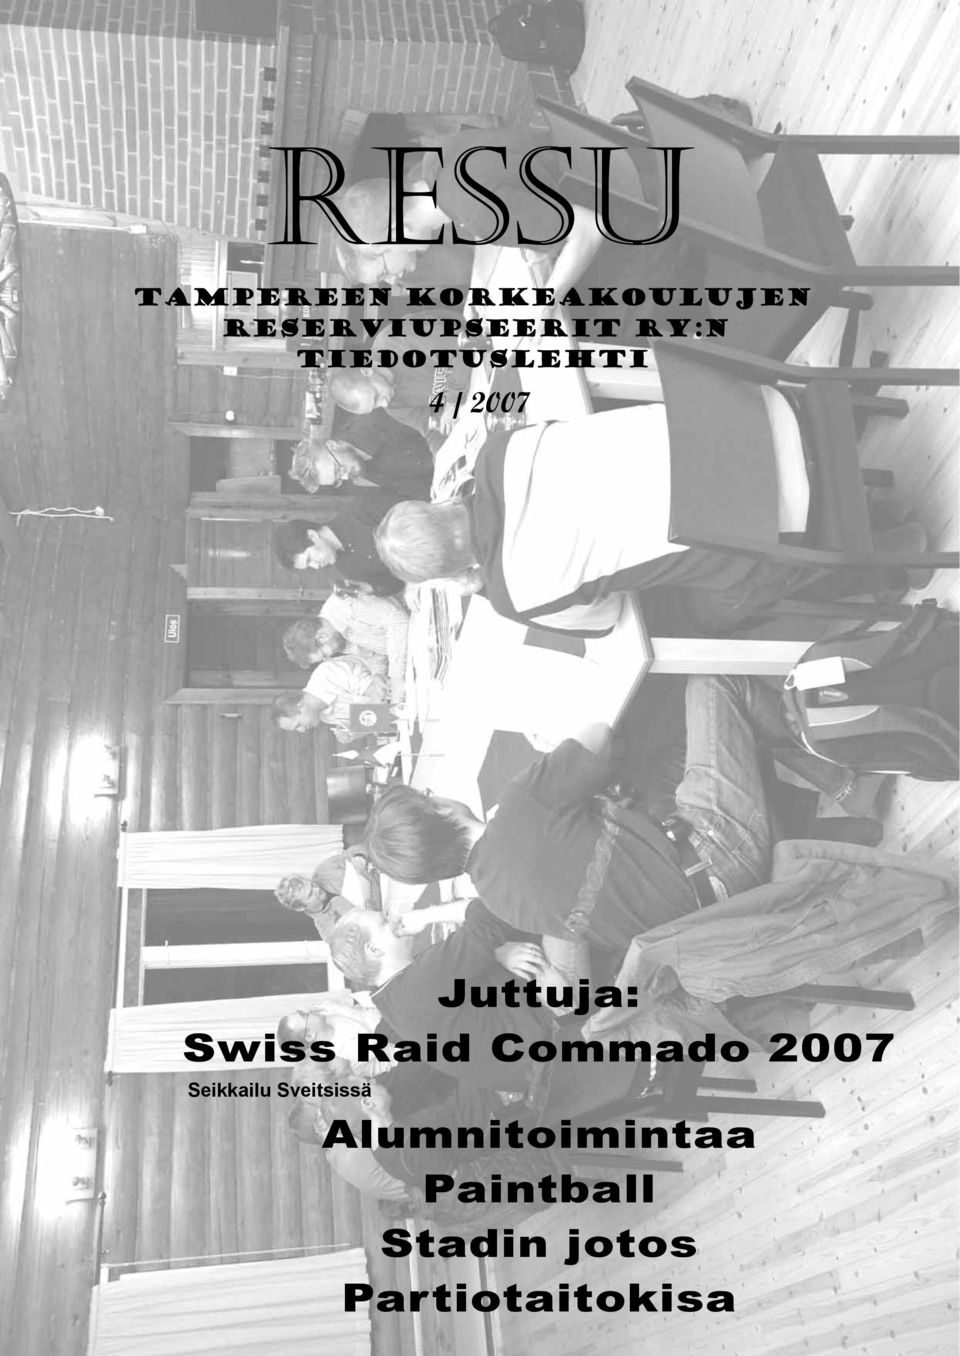 Juttuja: Swiss Raid Commado 2007 Seikkailu